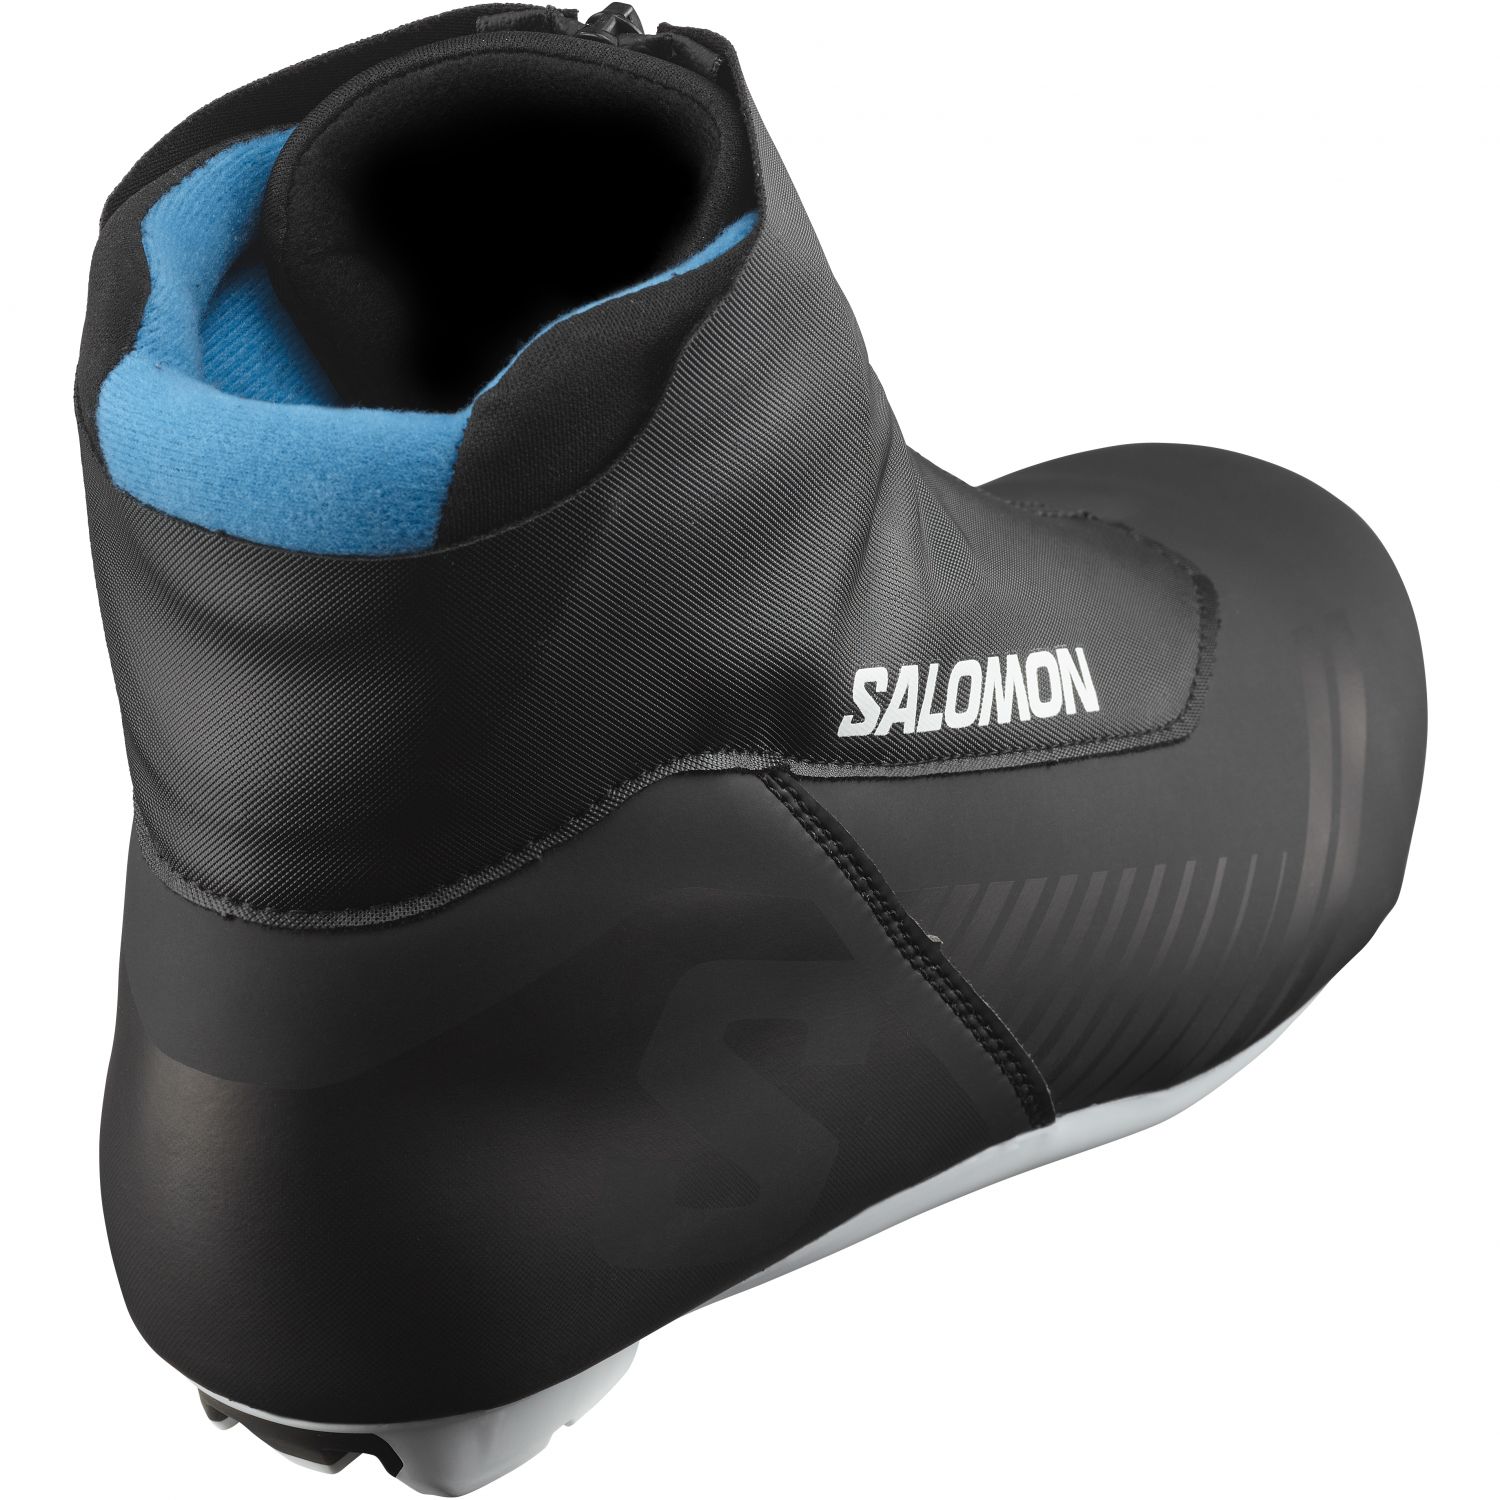 Salomon Escape RC Prolink, langlauf schoenen, zwart